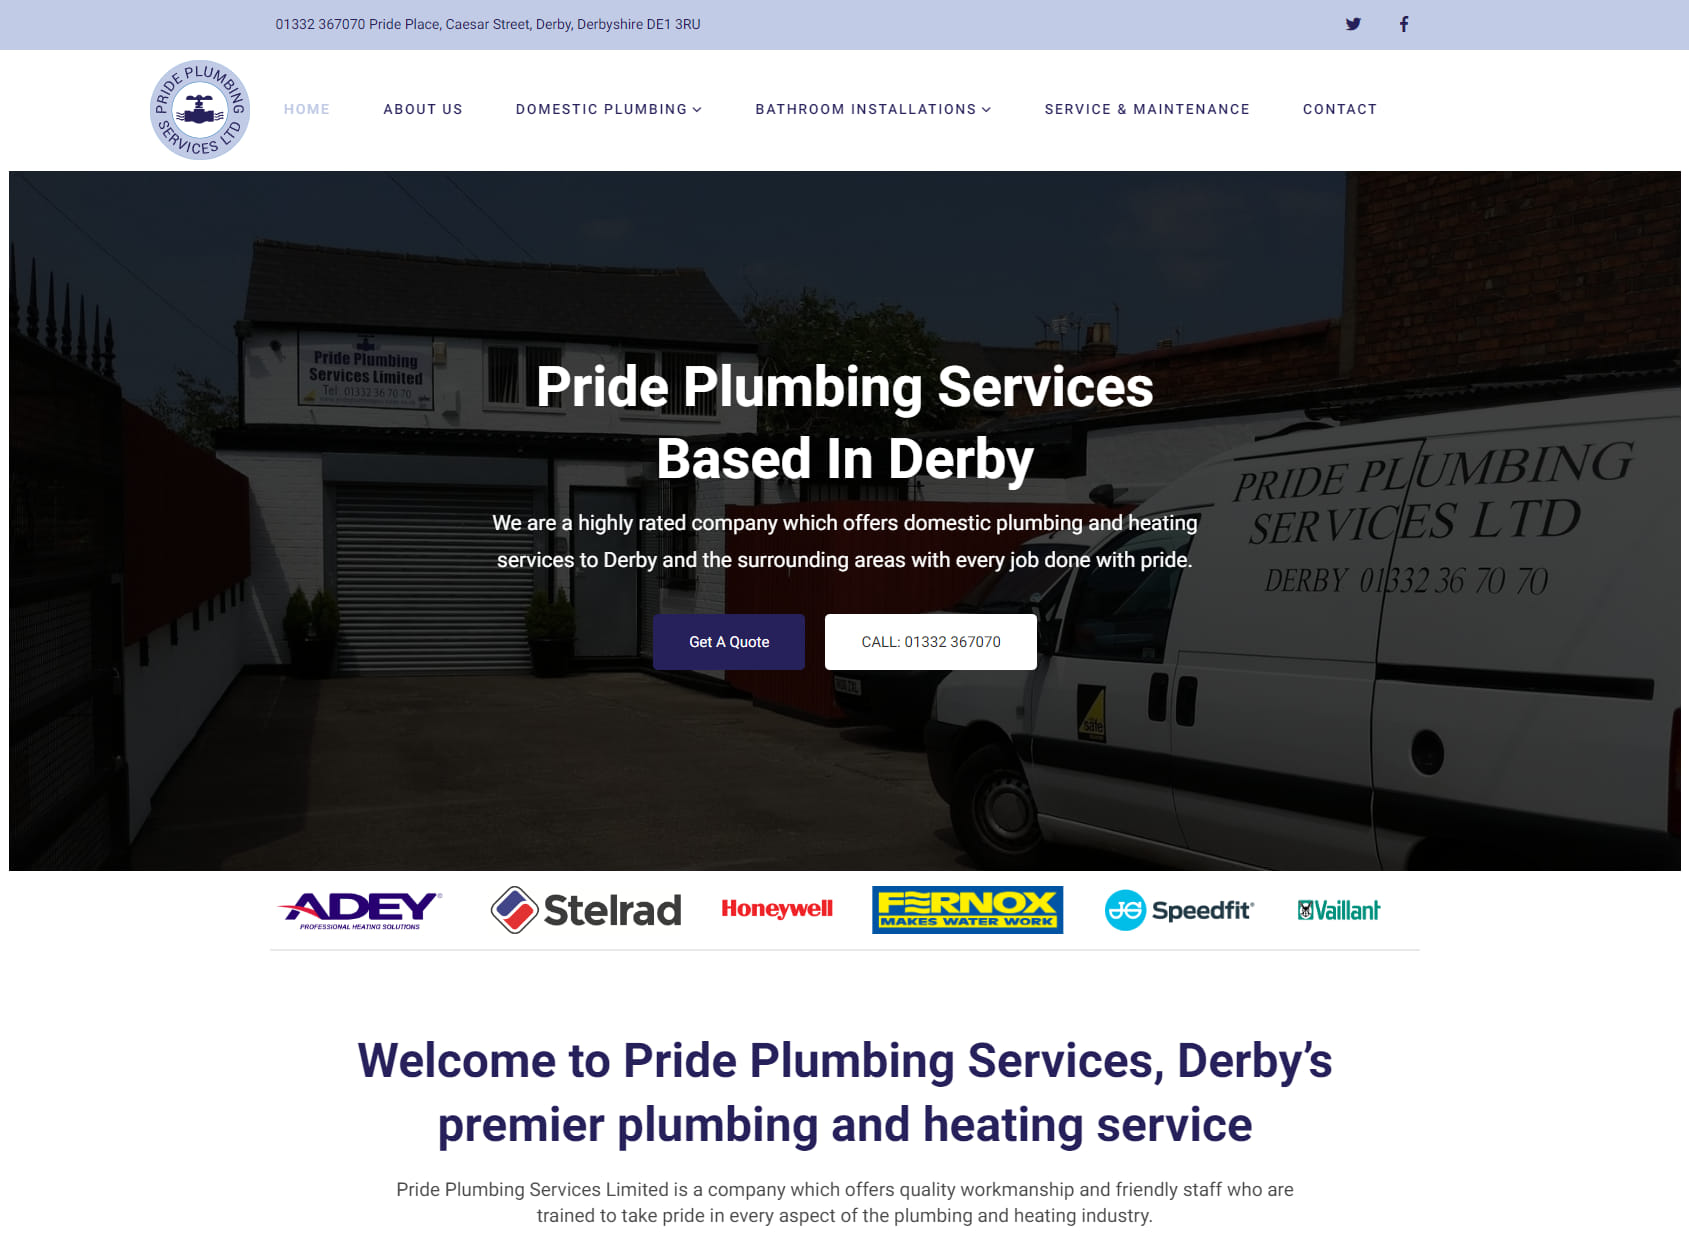 Pride Plumbing Services Ltd